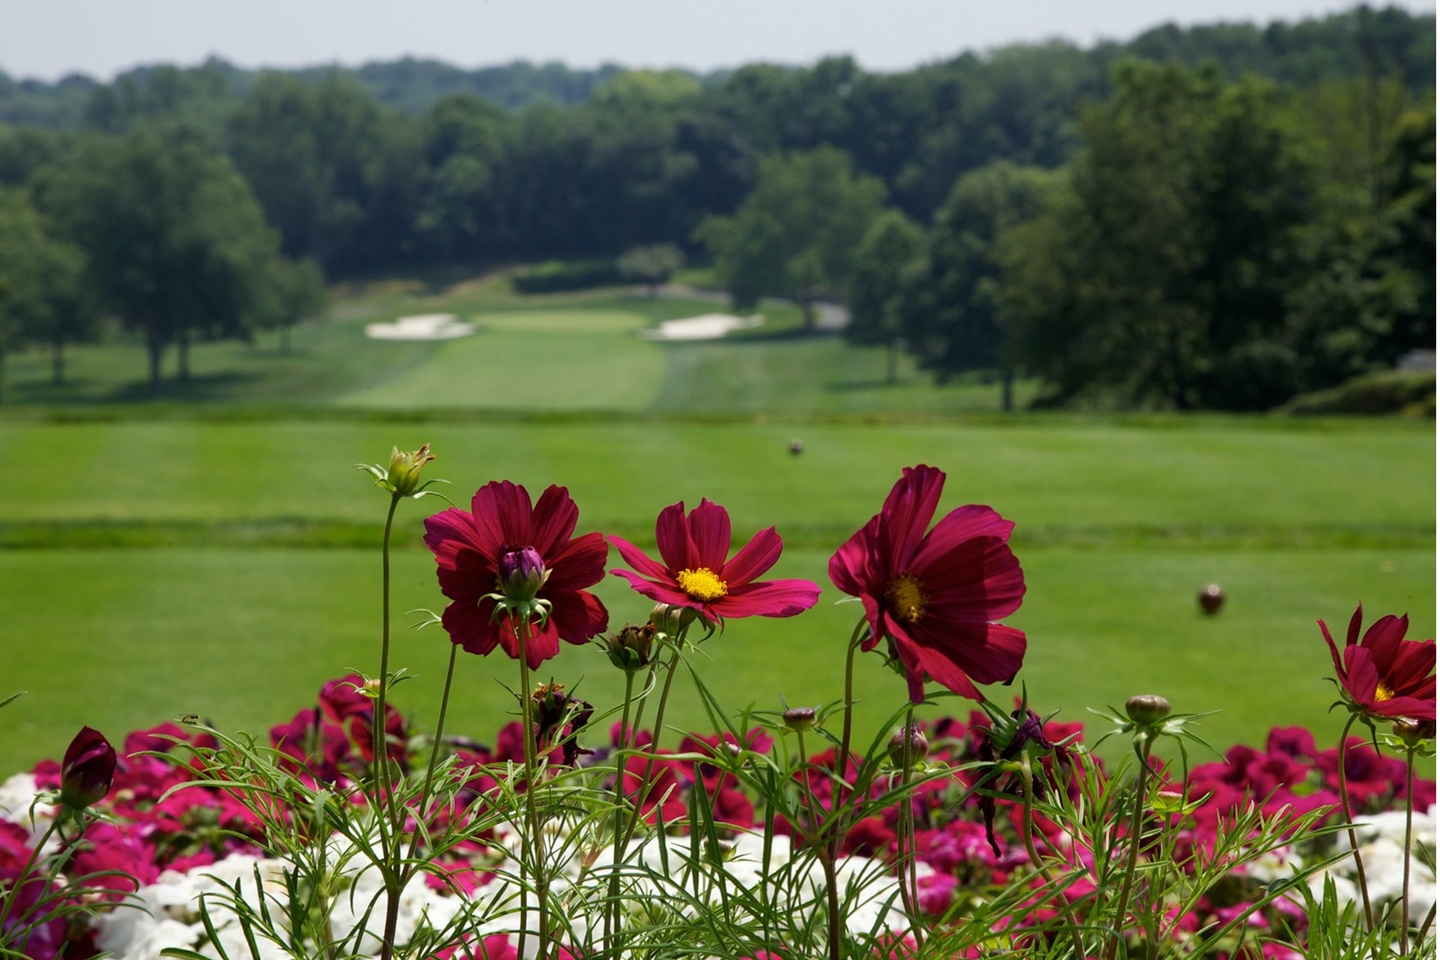 Fuchsia wild flowers growing near a golf course